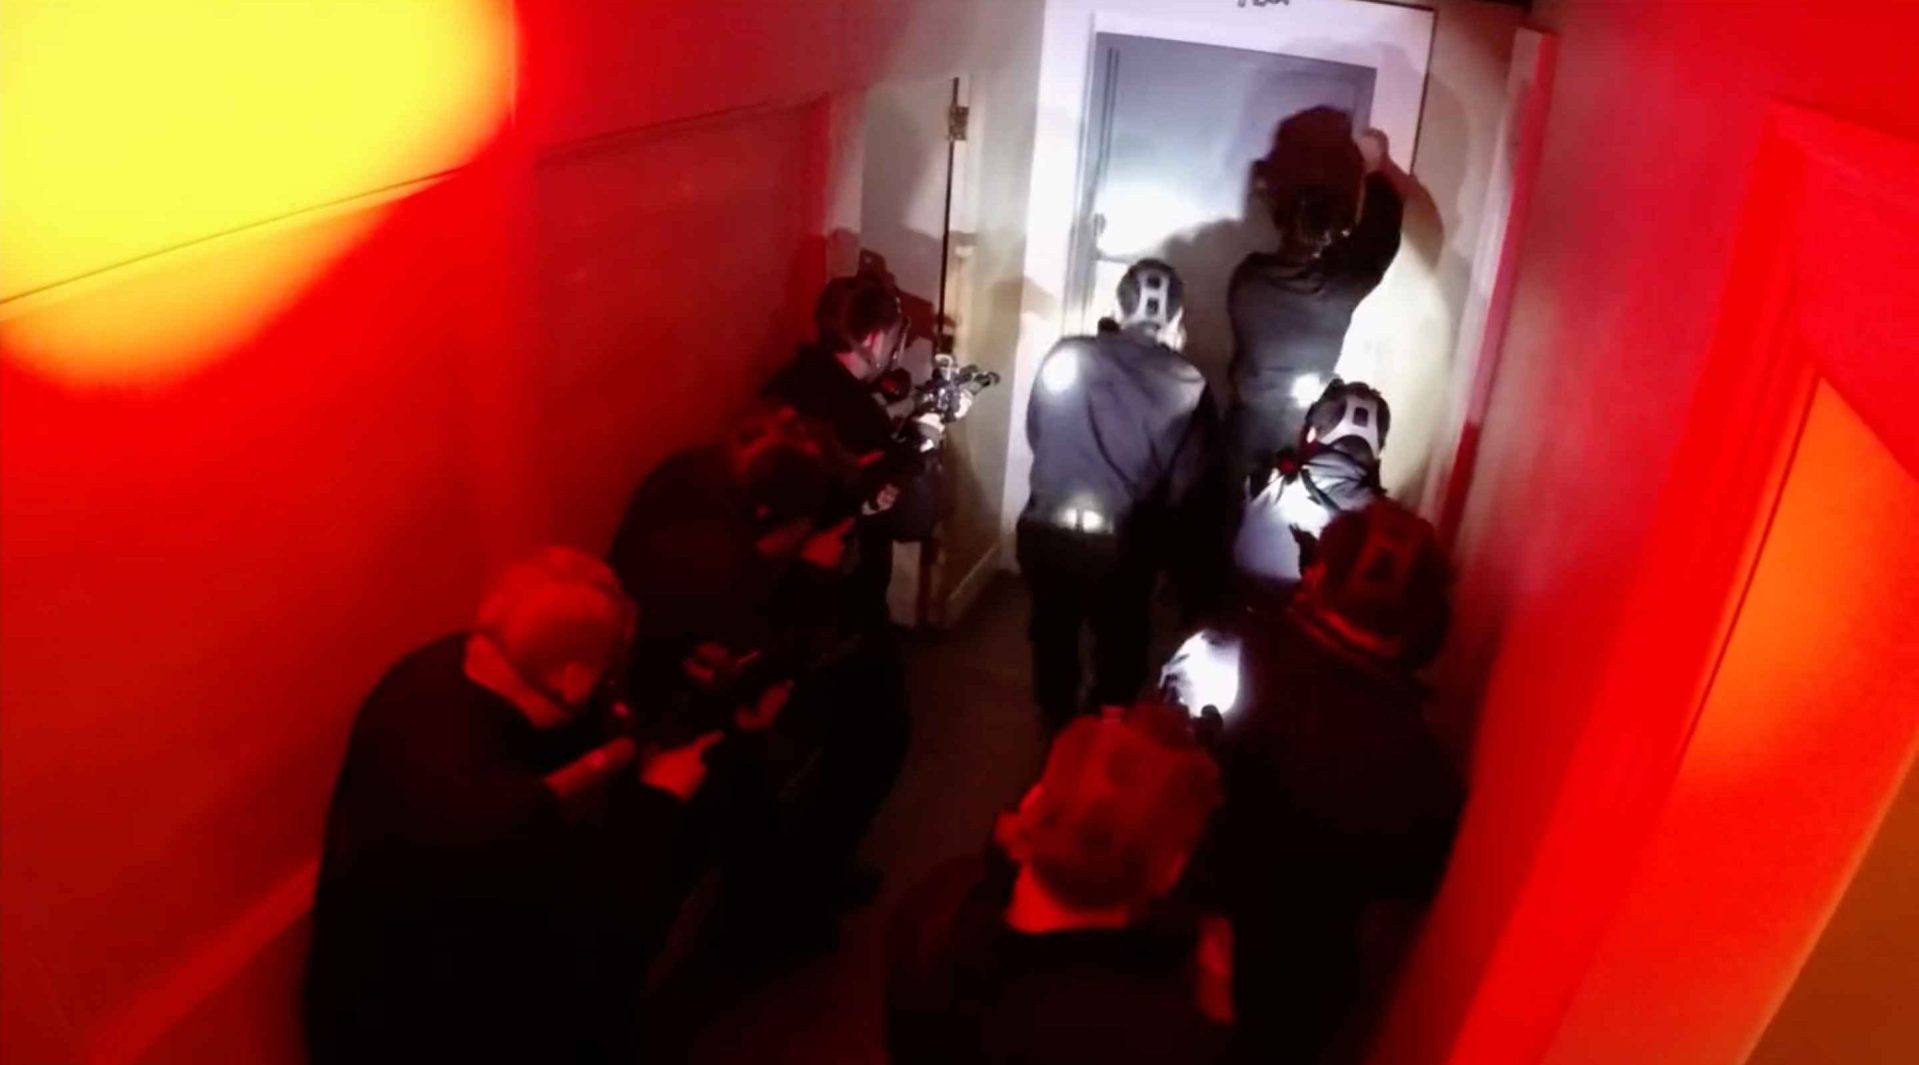 Blindspot - Squad prepares to breach door